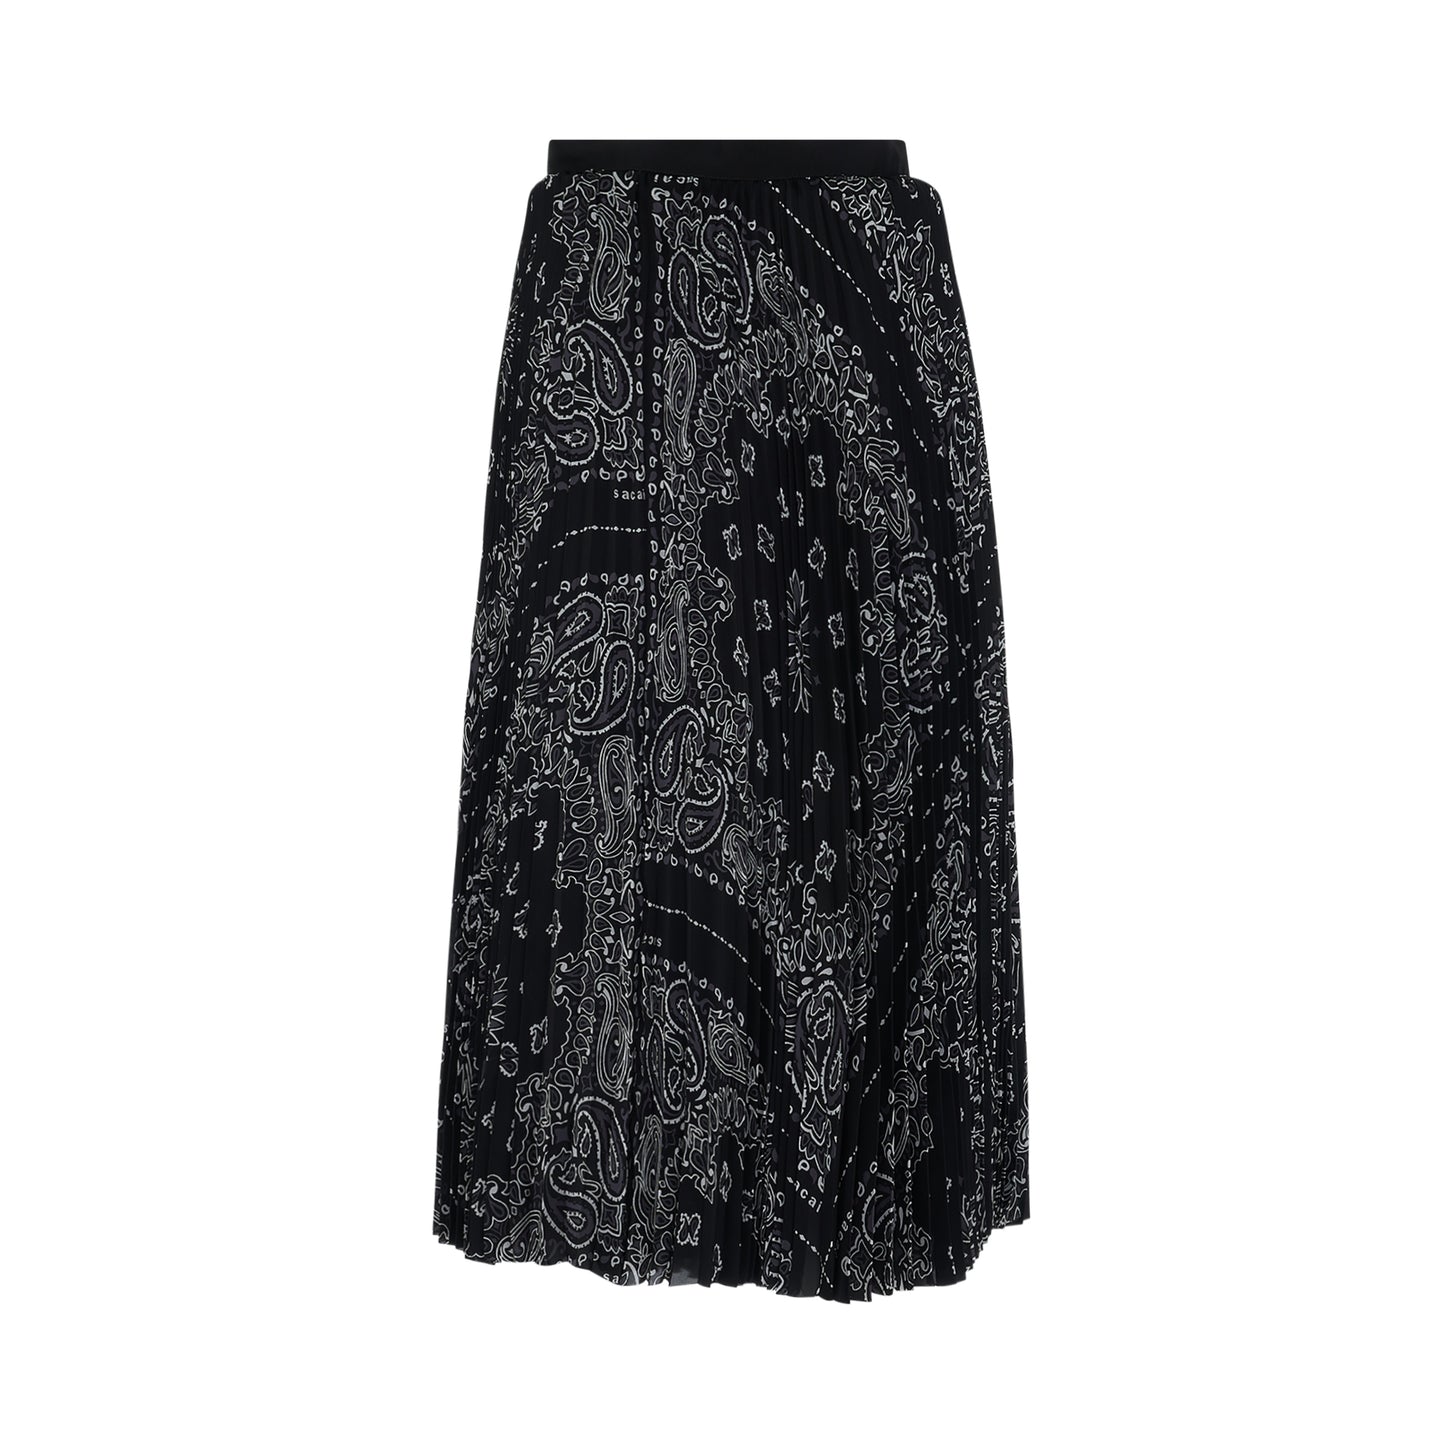 Bandana Print Skirt in Black